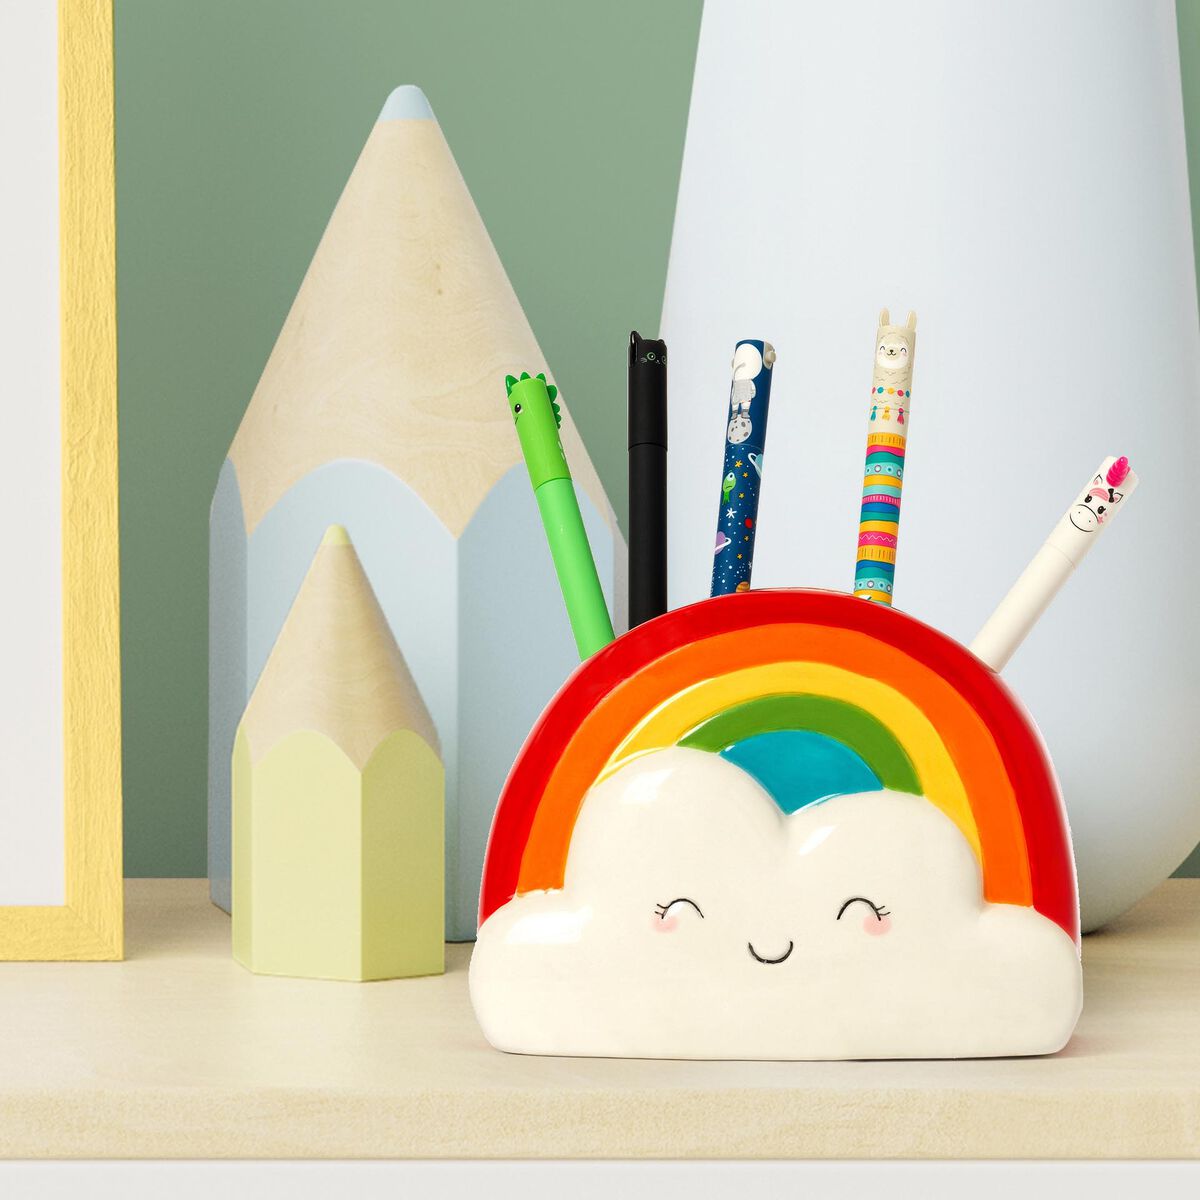 Ceramic Pen Holder - Desk Friends - Rainbow